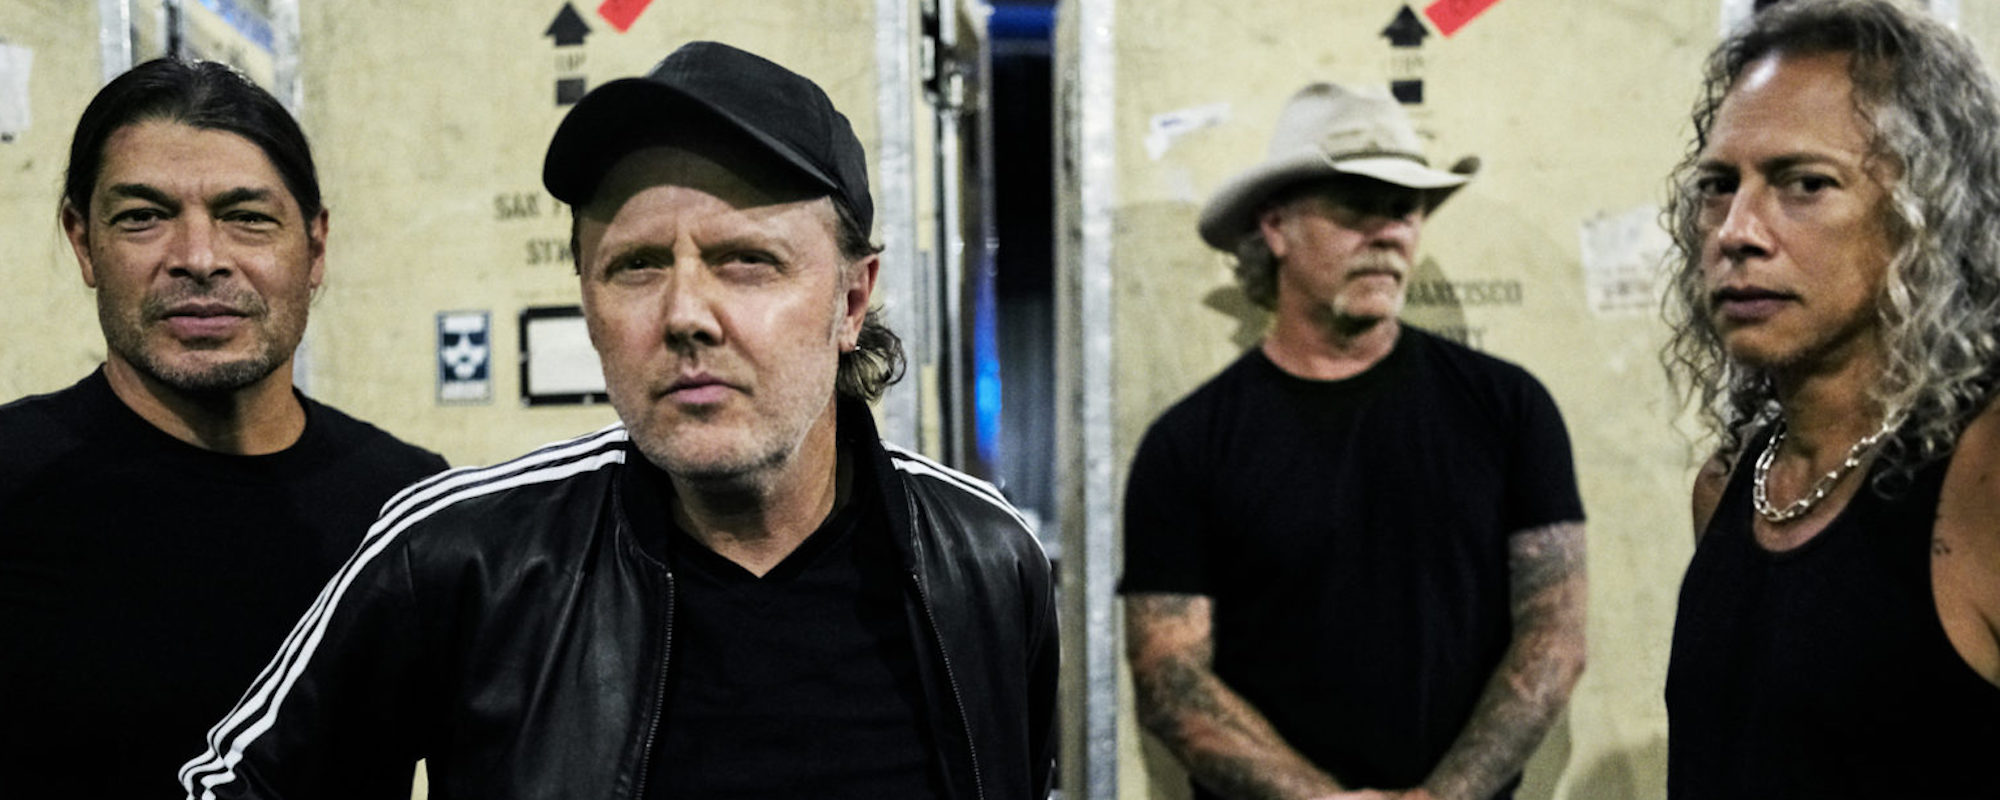 Metallica to Stream 40th Anniversary Concert